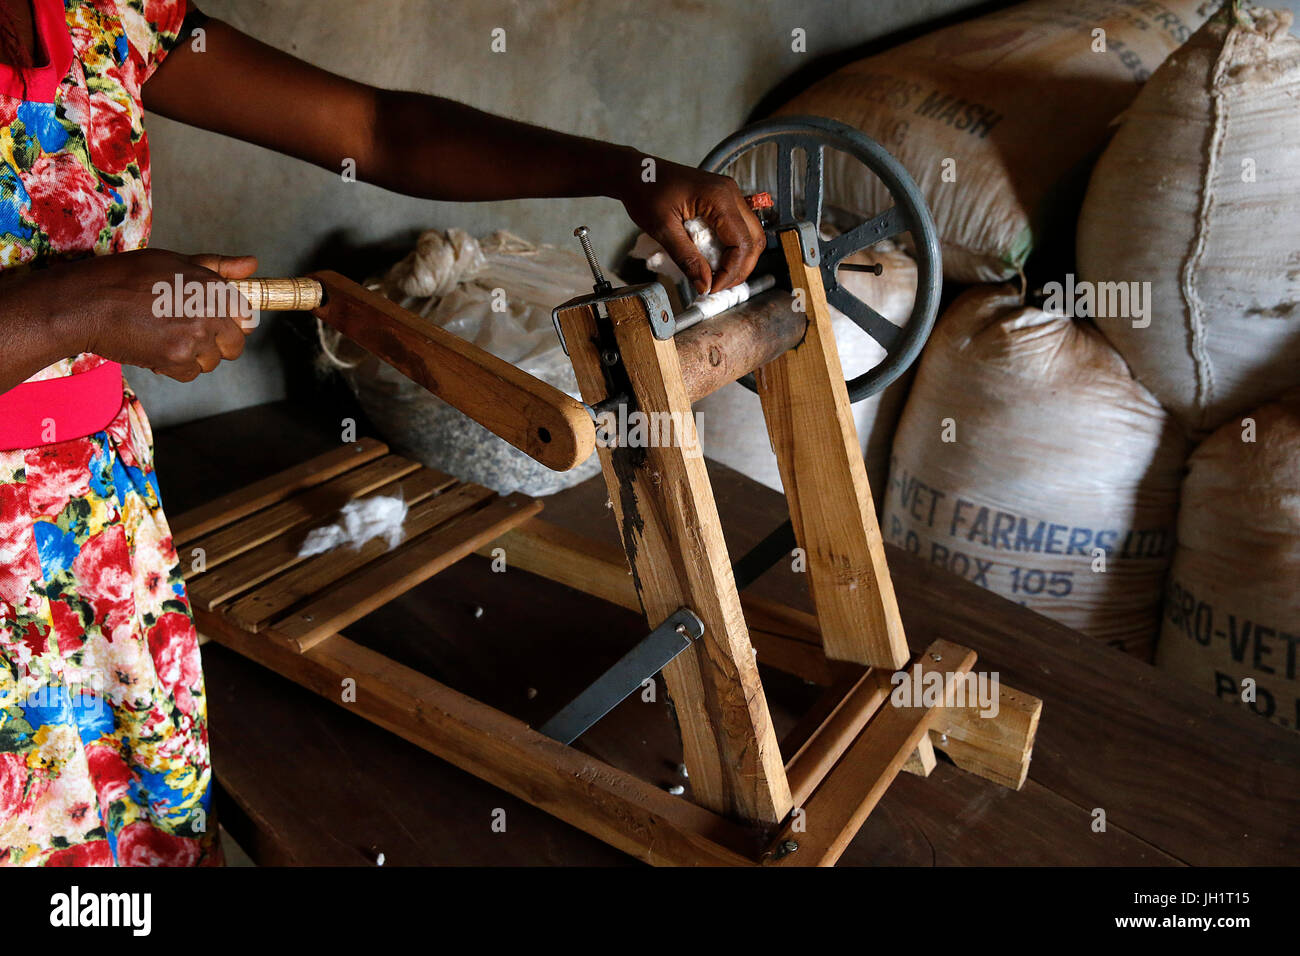 ENCOT Microfinance Client Proscovia Tusabe produziert Bio-Baumwolle. Uganda. Stockfoto